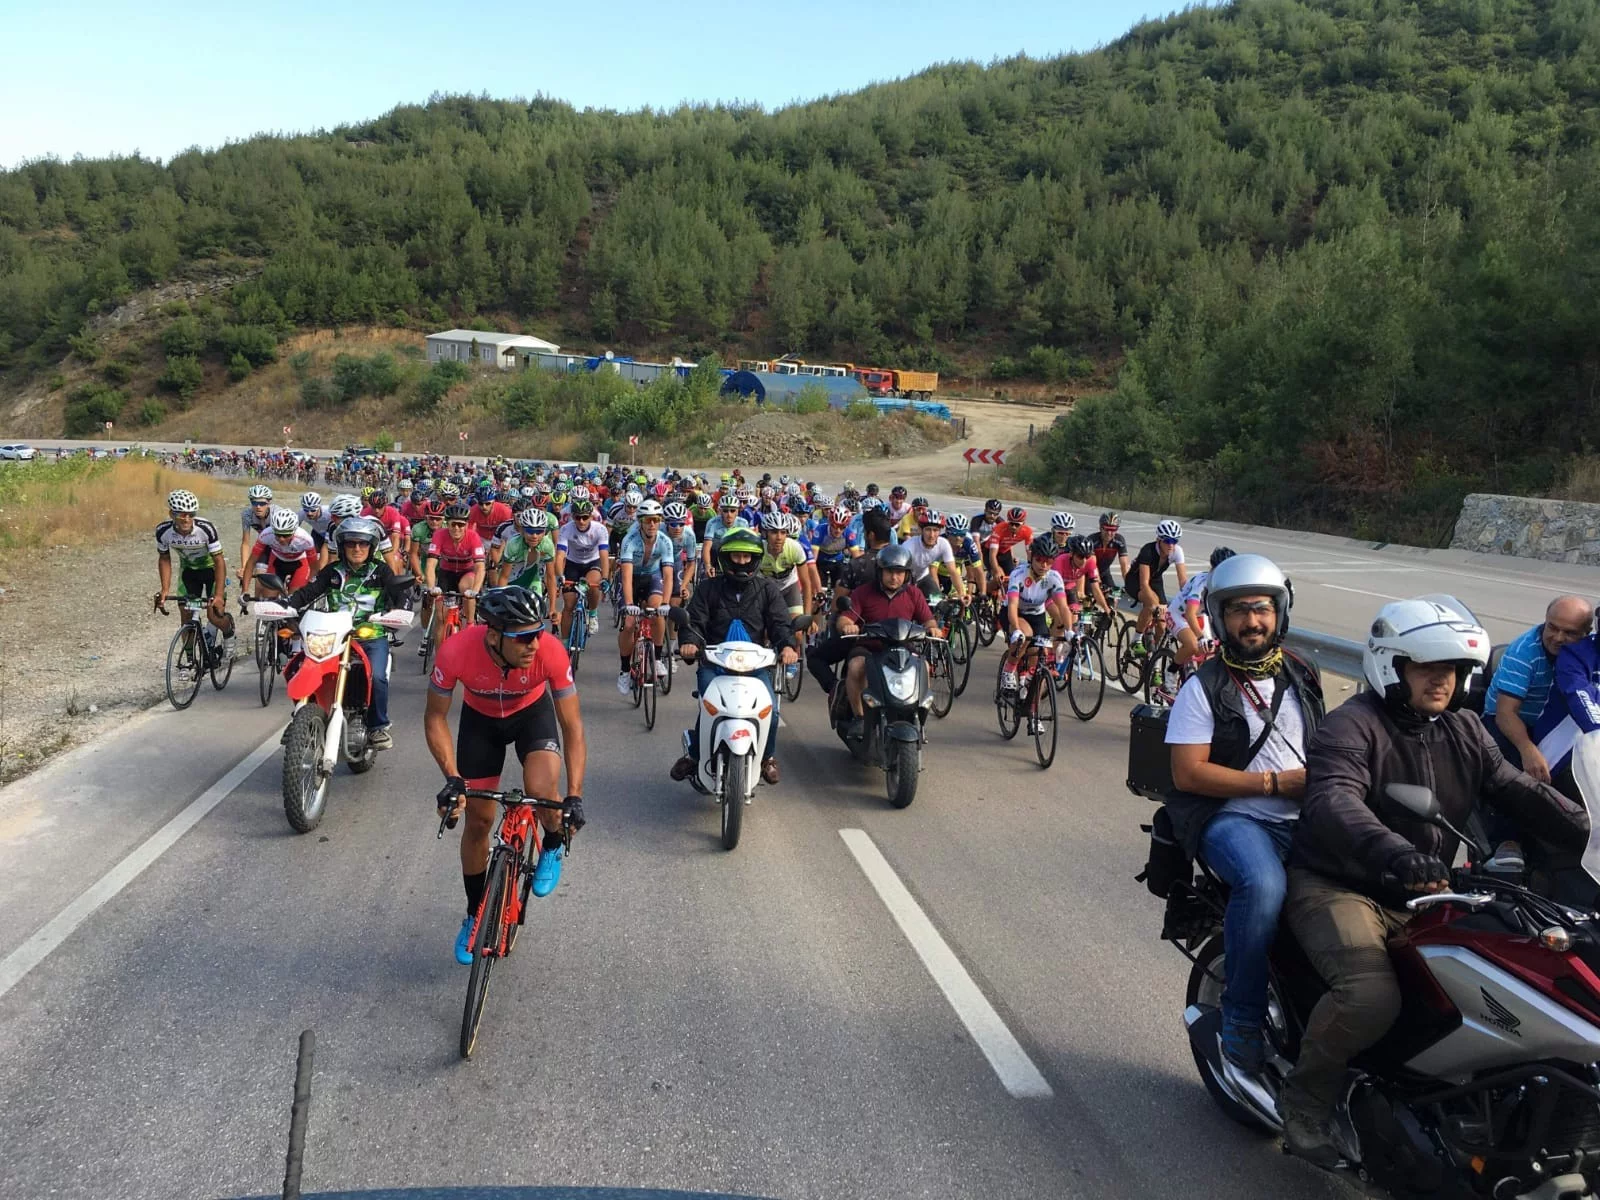 850 bisikletçi Uludağ'a pedal çevirdi